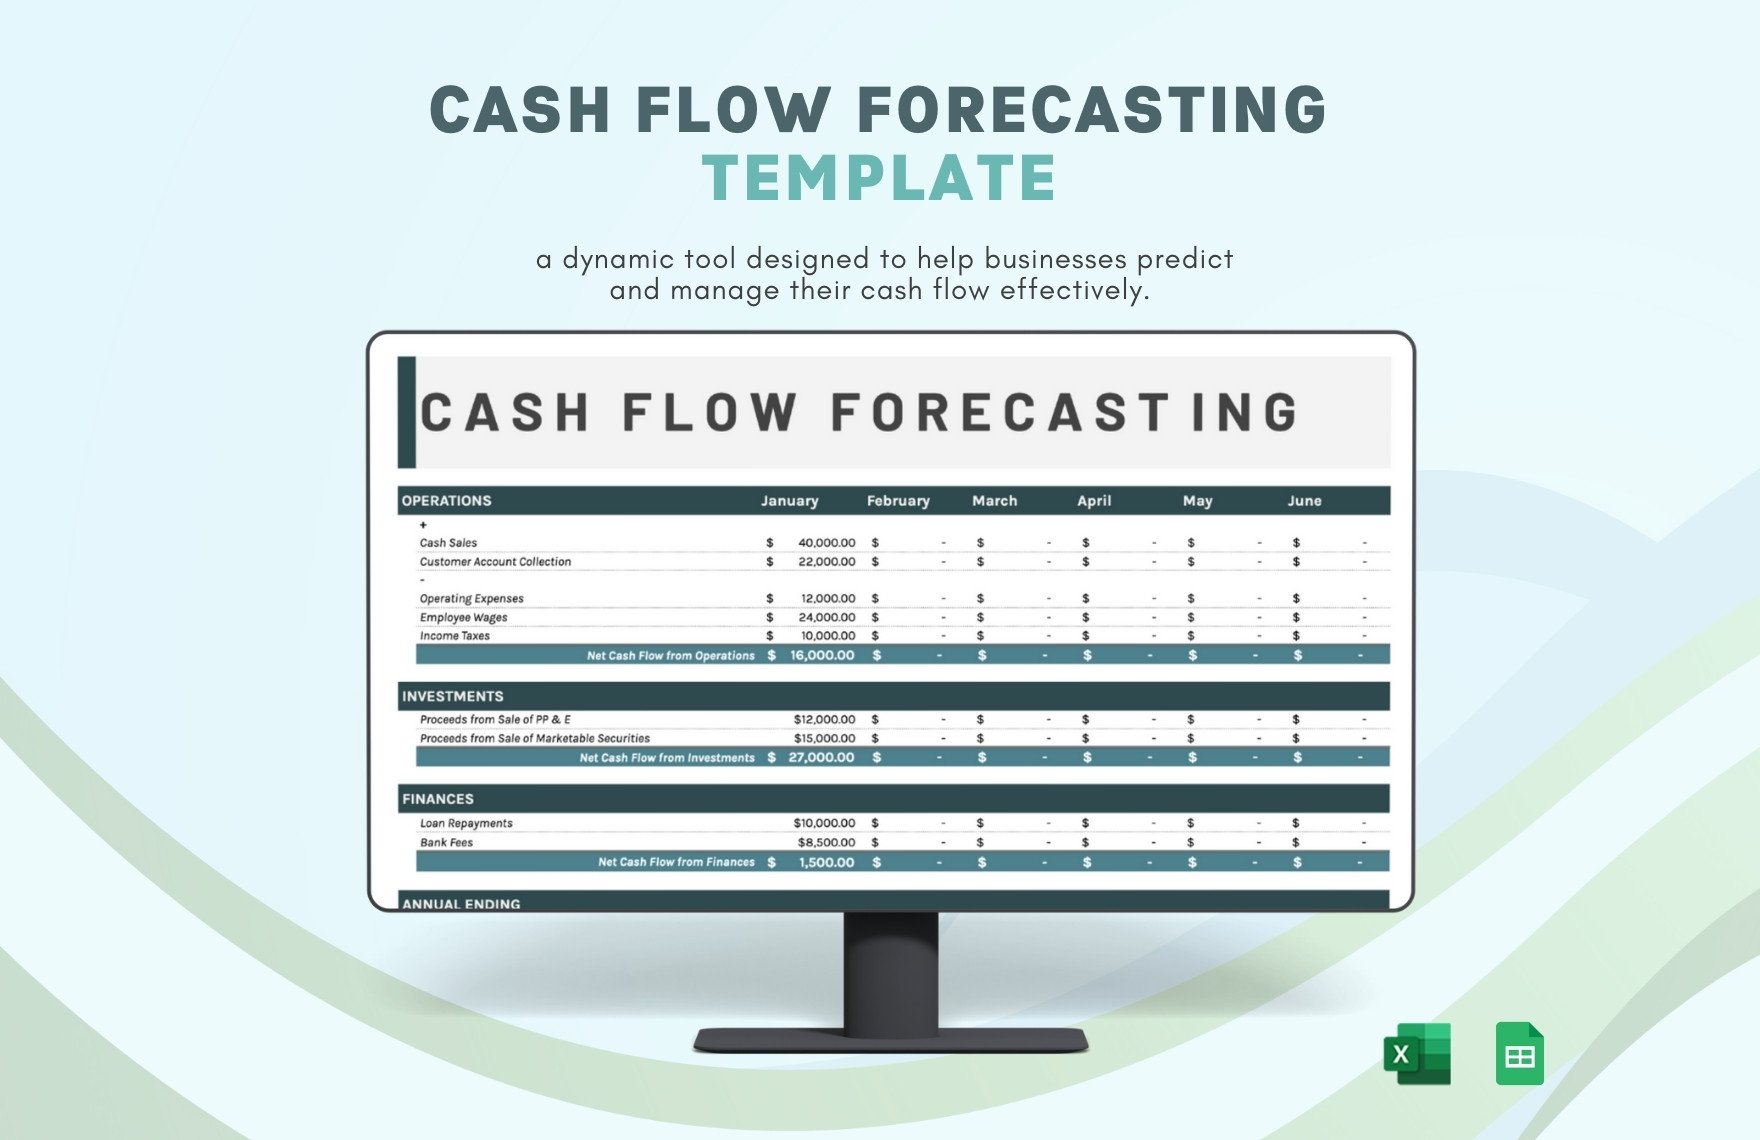 Cash flow forecasting template